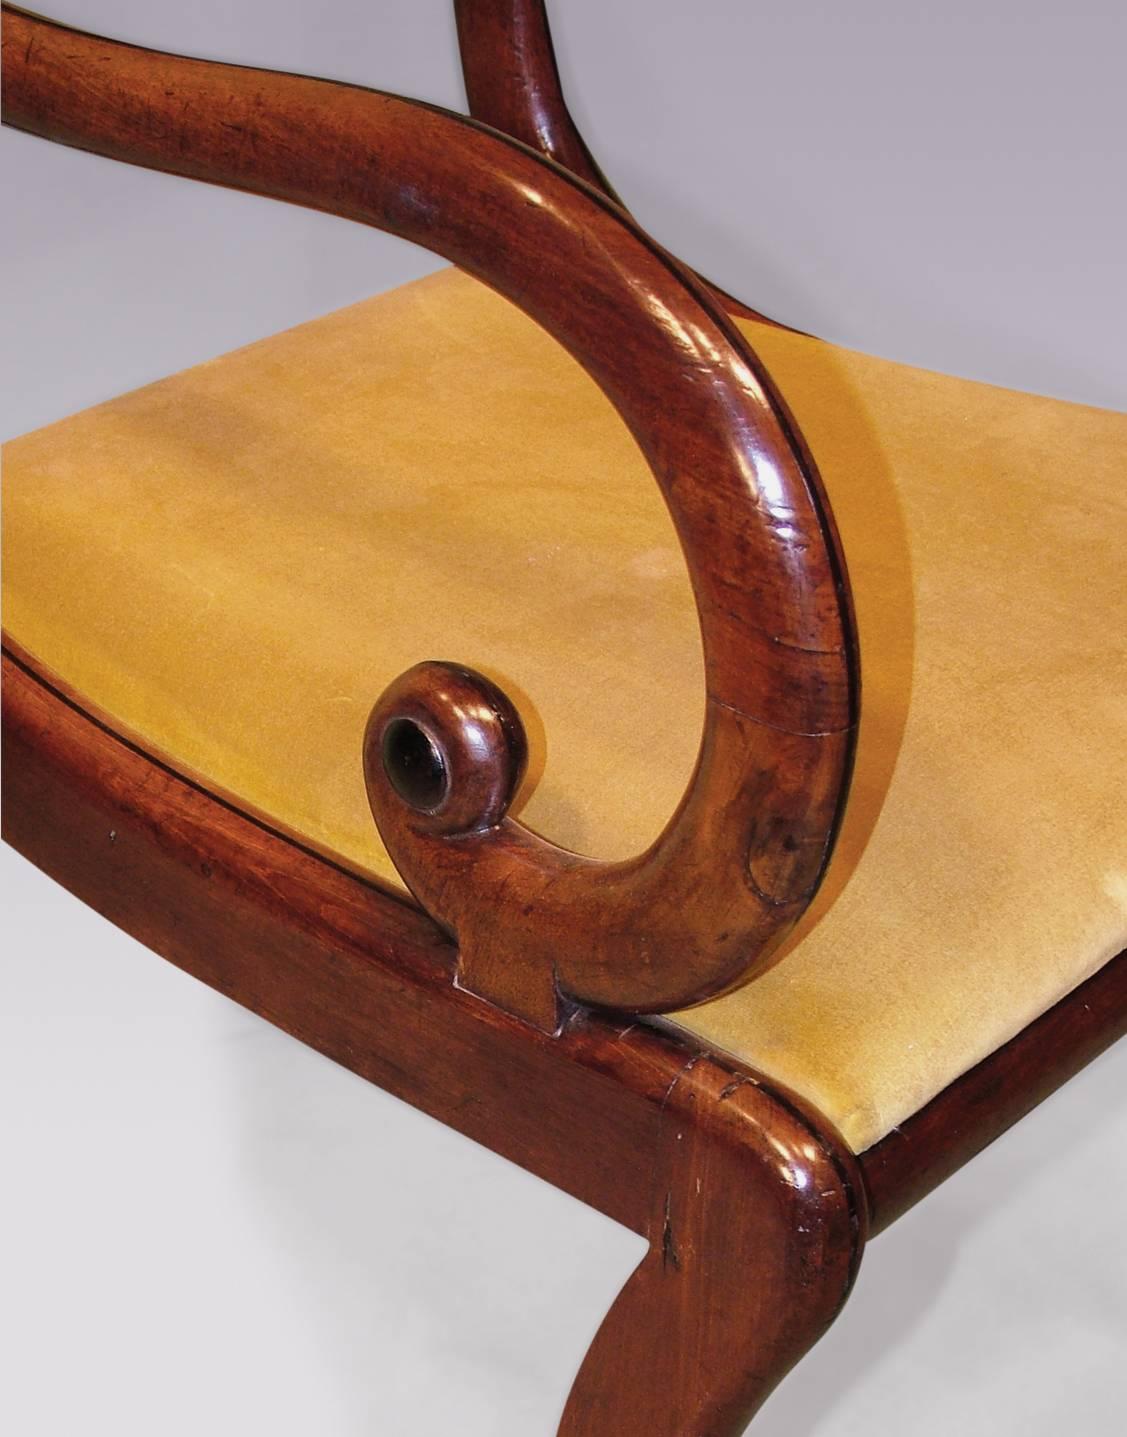 English Regency period mahogany rope-twist armchairs